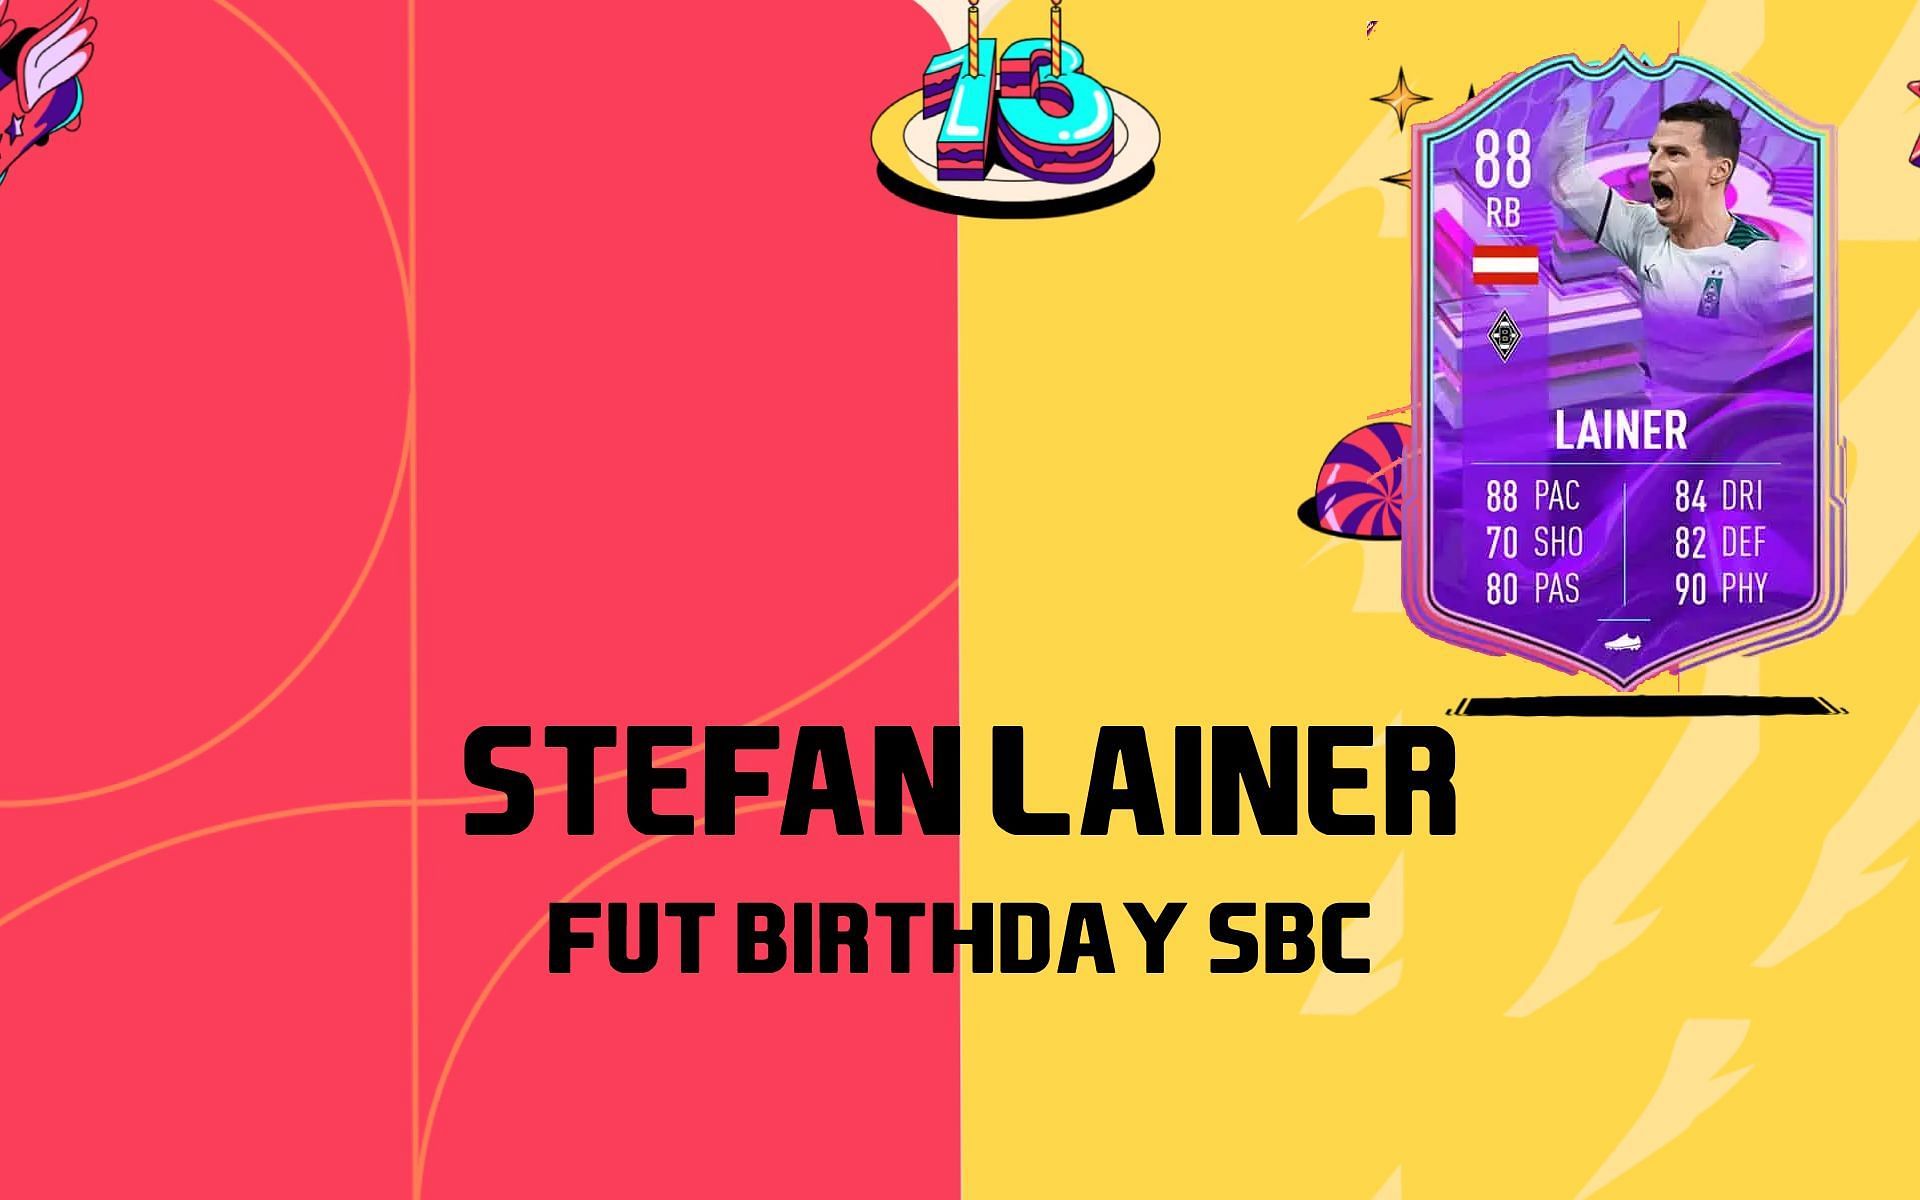 Stefan Lainer FUT Birthday card in FIFA 22 Ultimate Team (Image via Sportskeeda)